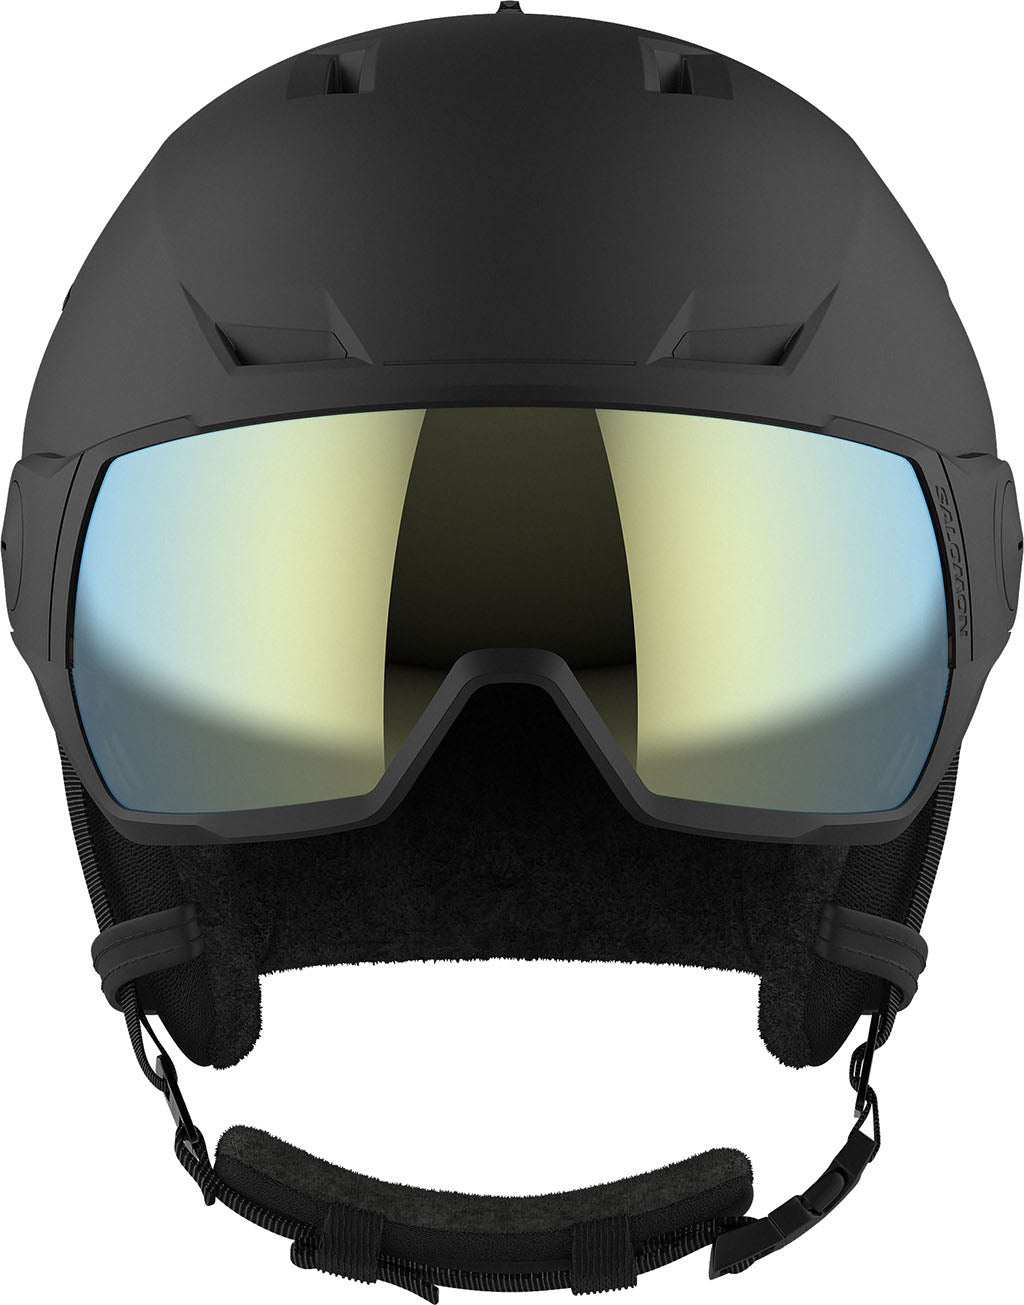 Salomon Driver Prime Sigma Plus - Casque de ski, Livraison gratuite